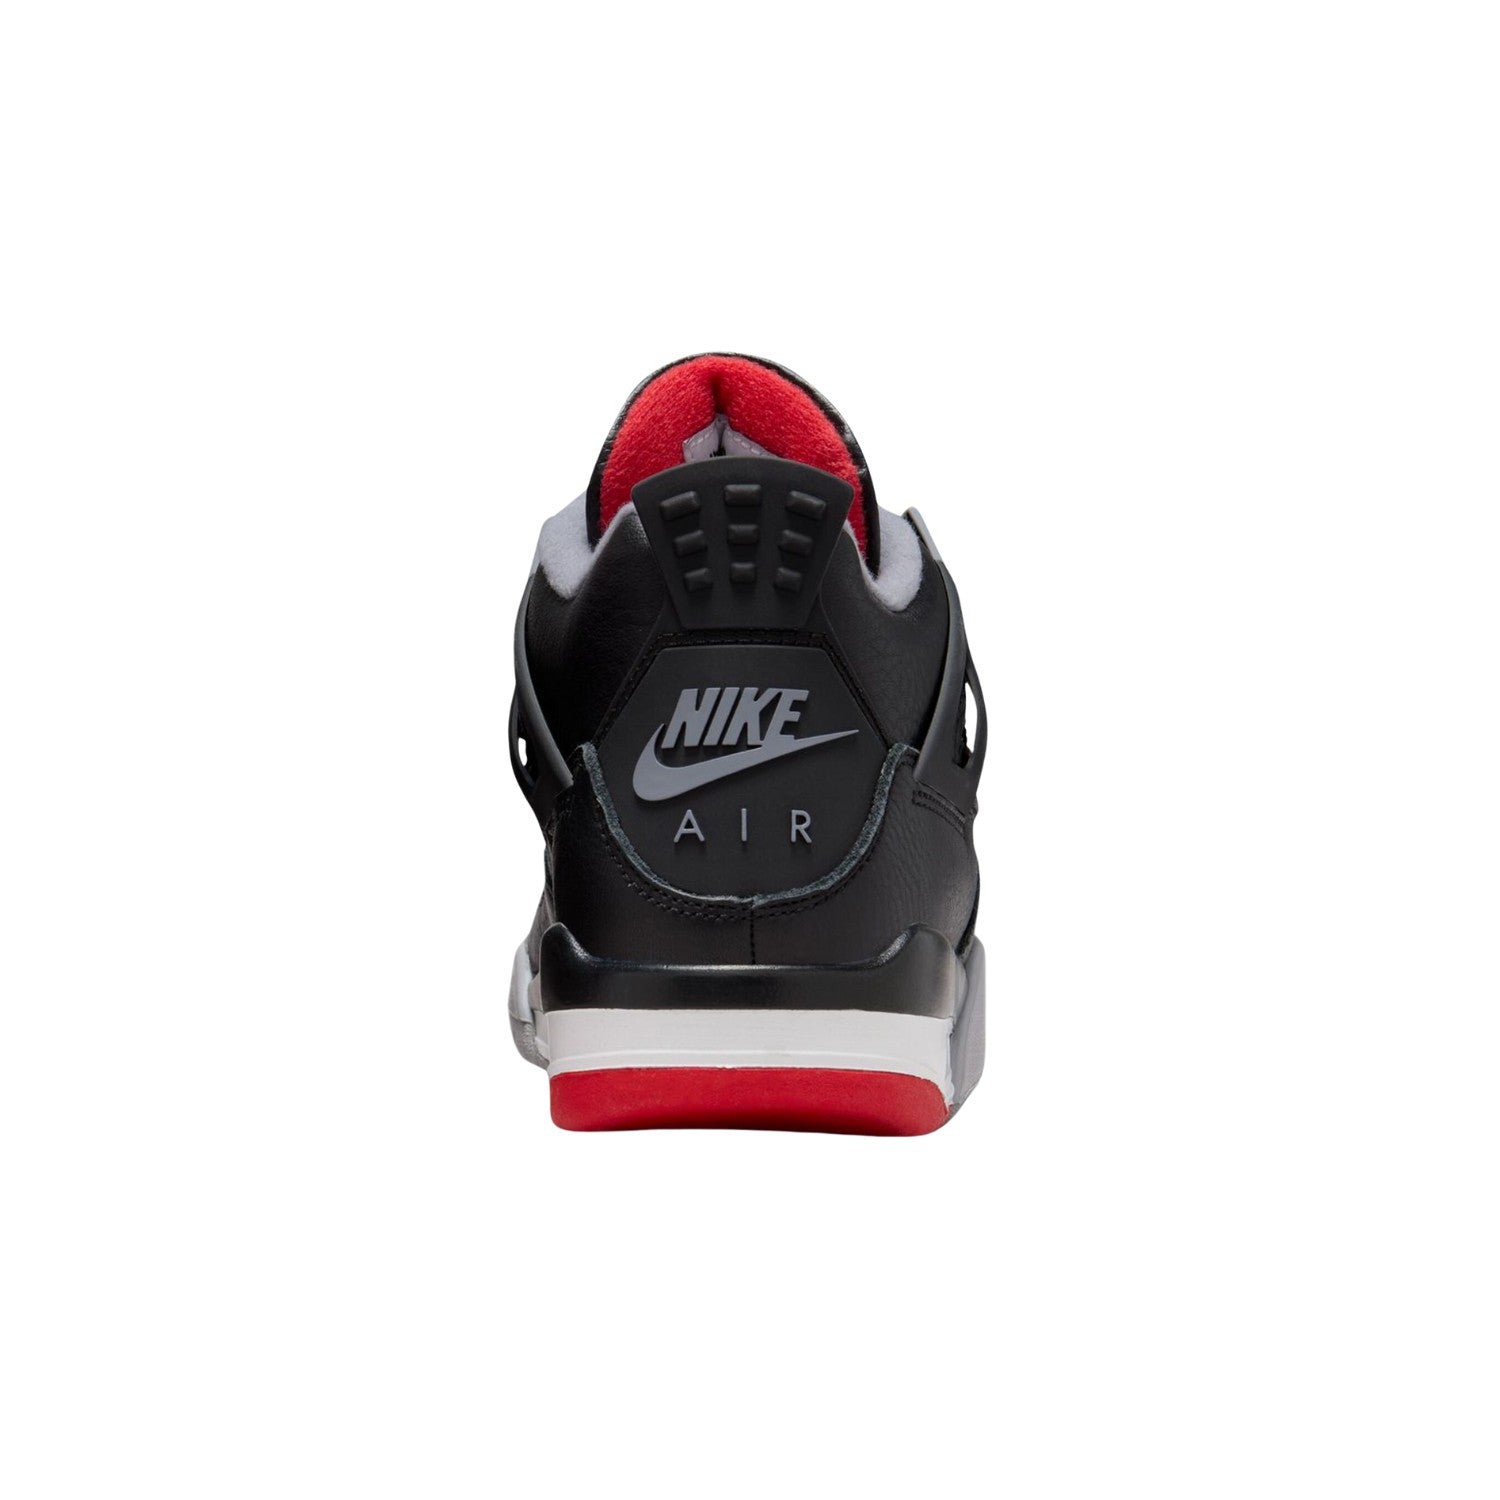 Air Jordan 4 Retro (Gs) "Bred Reimagined" Big Kids Style : Fq8213